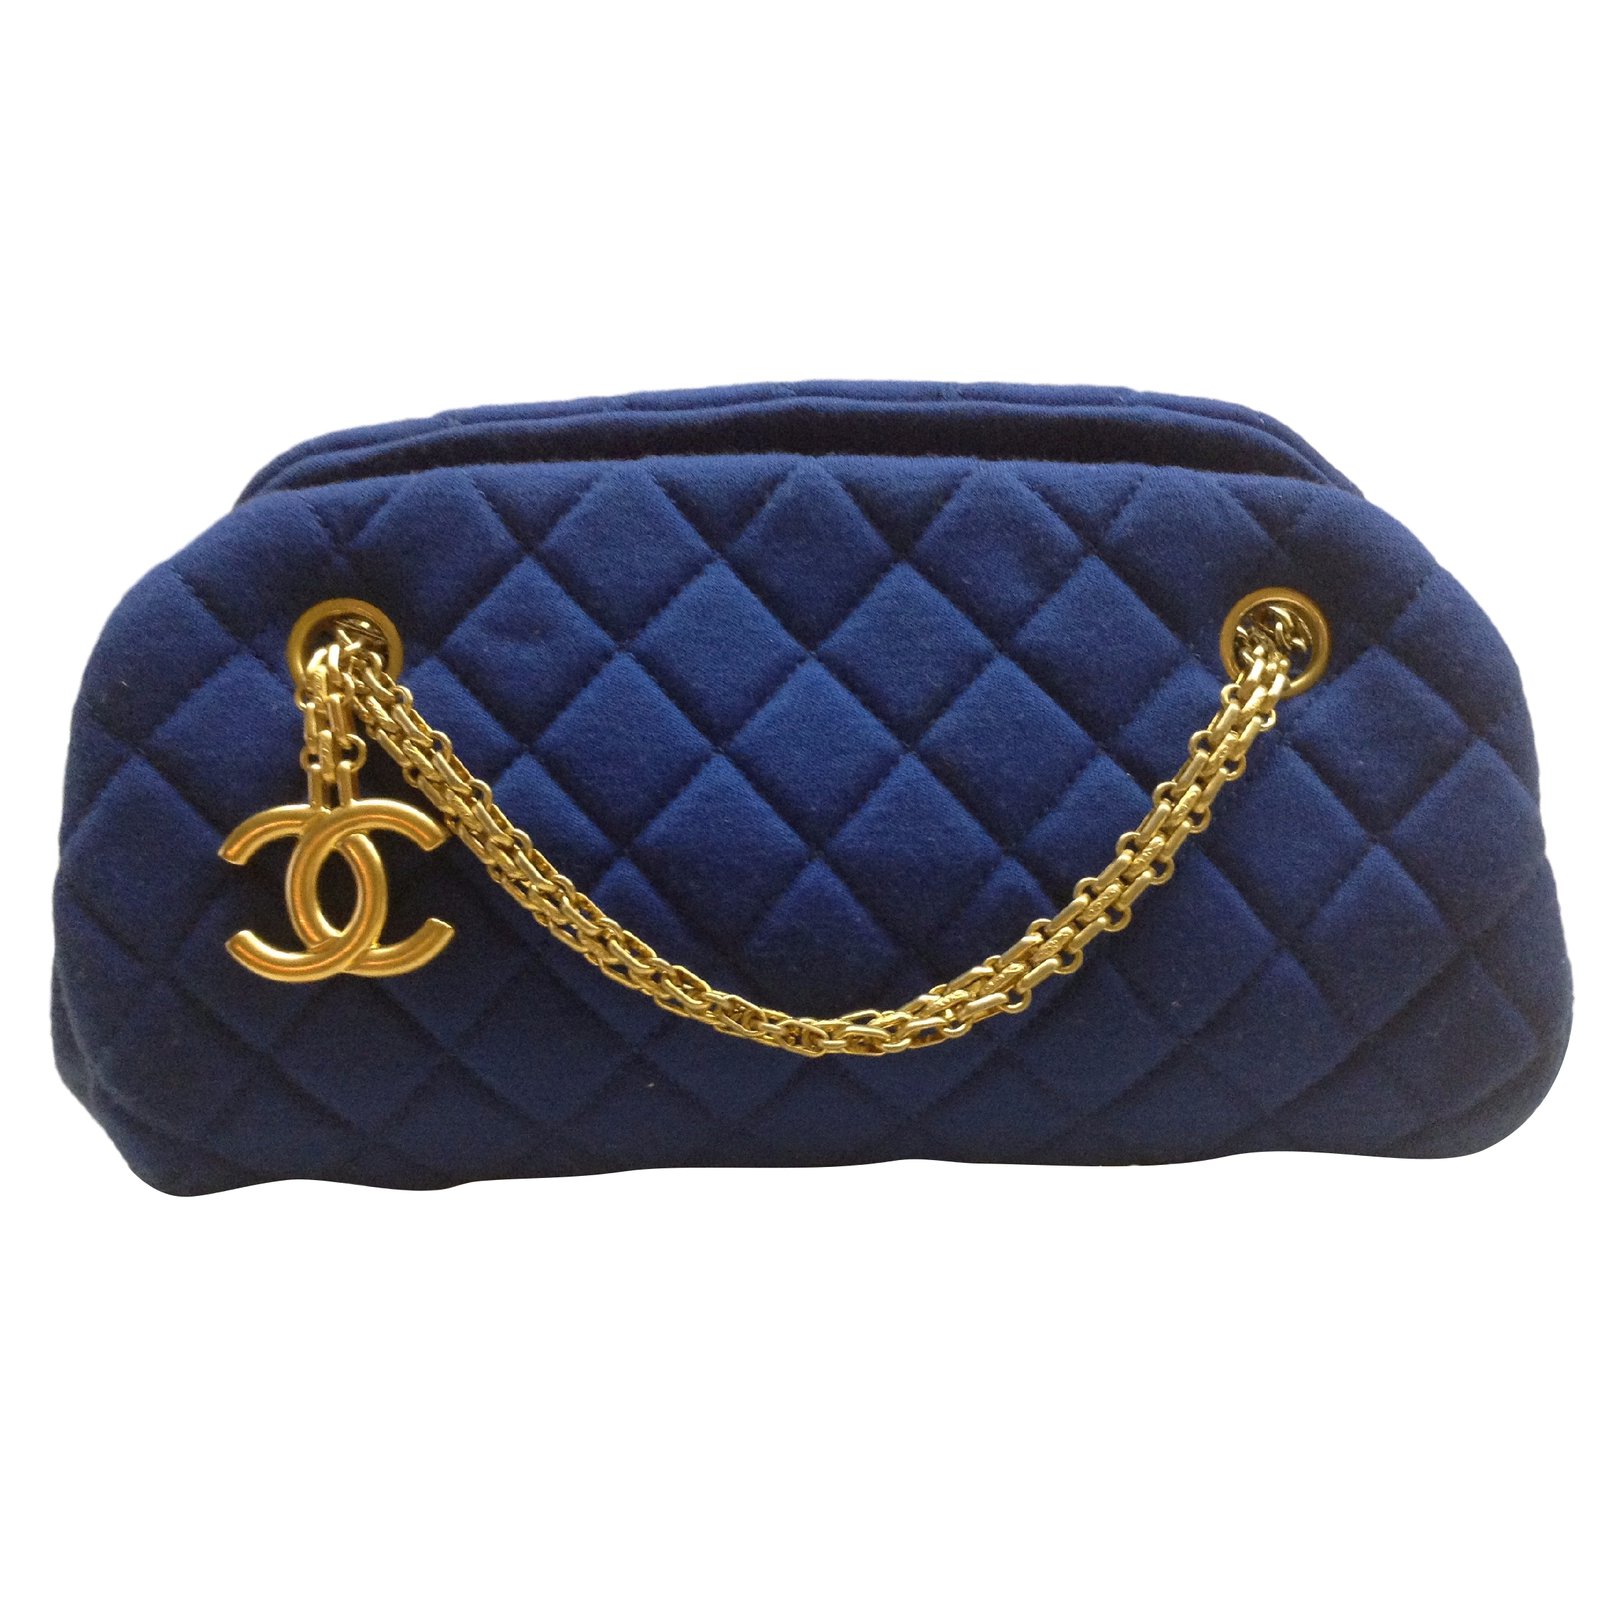 Chanel Mademoiselle Handbag